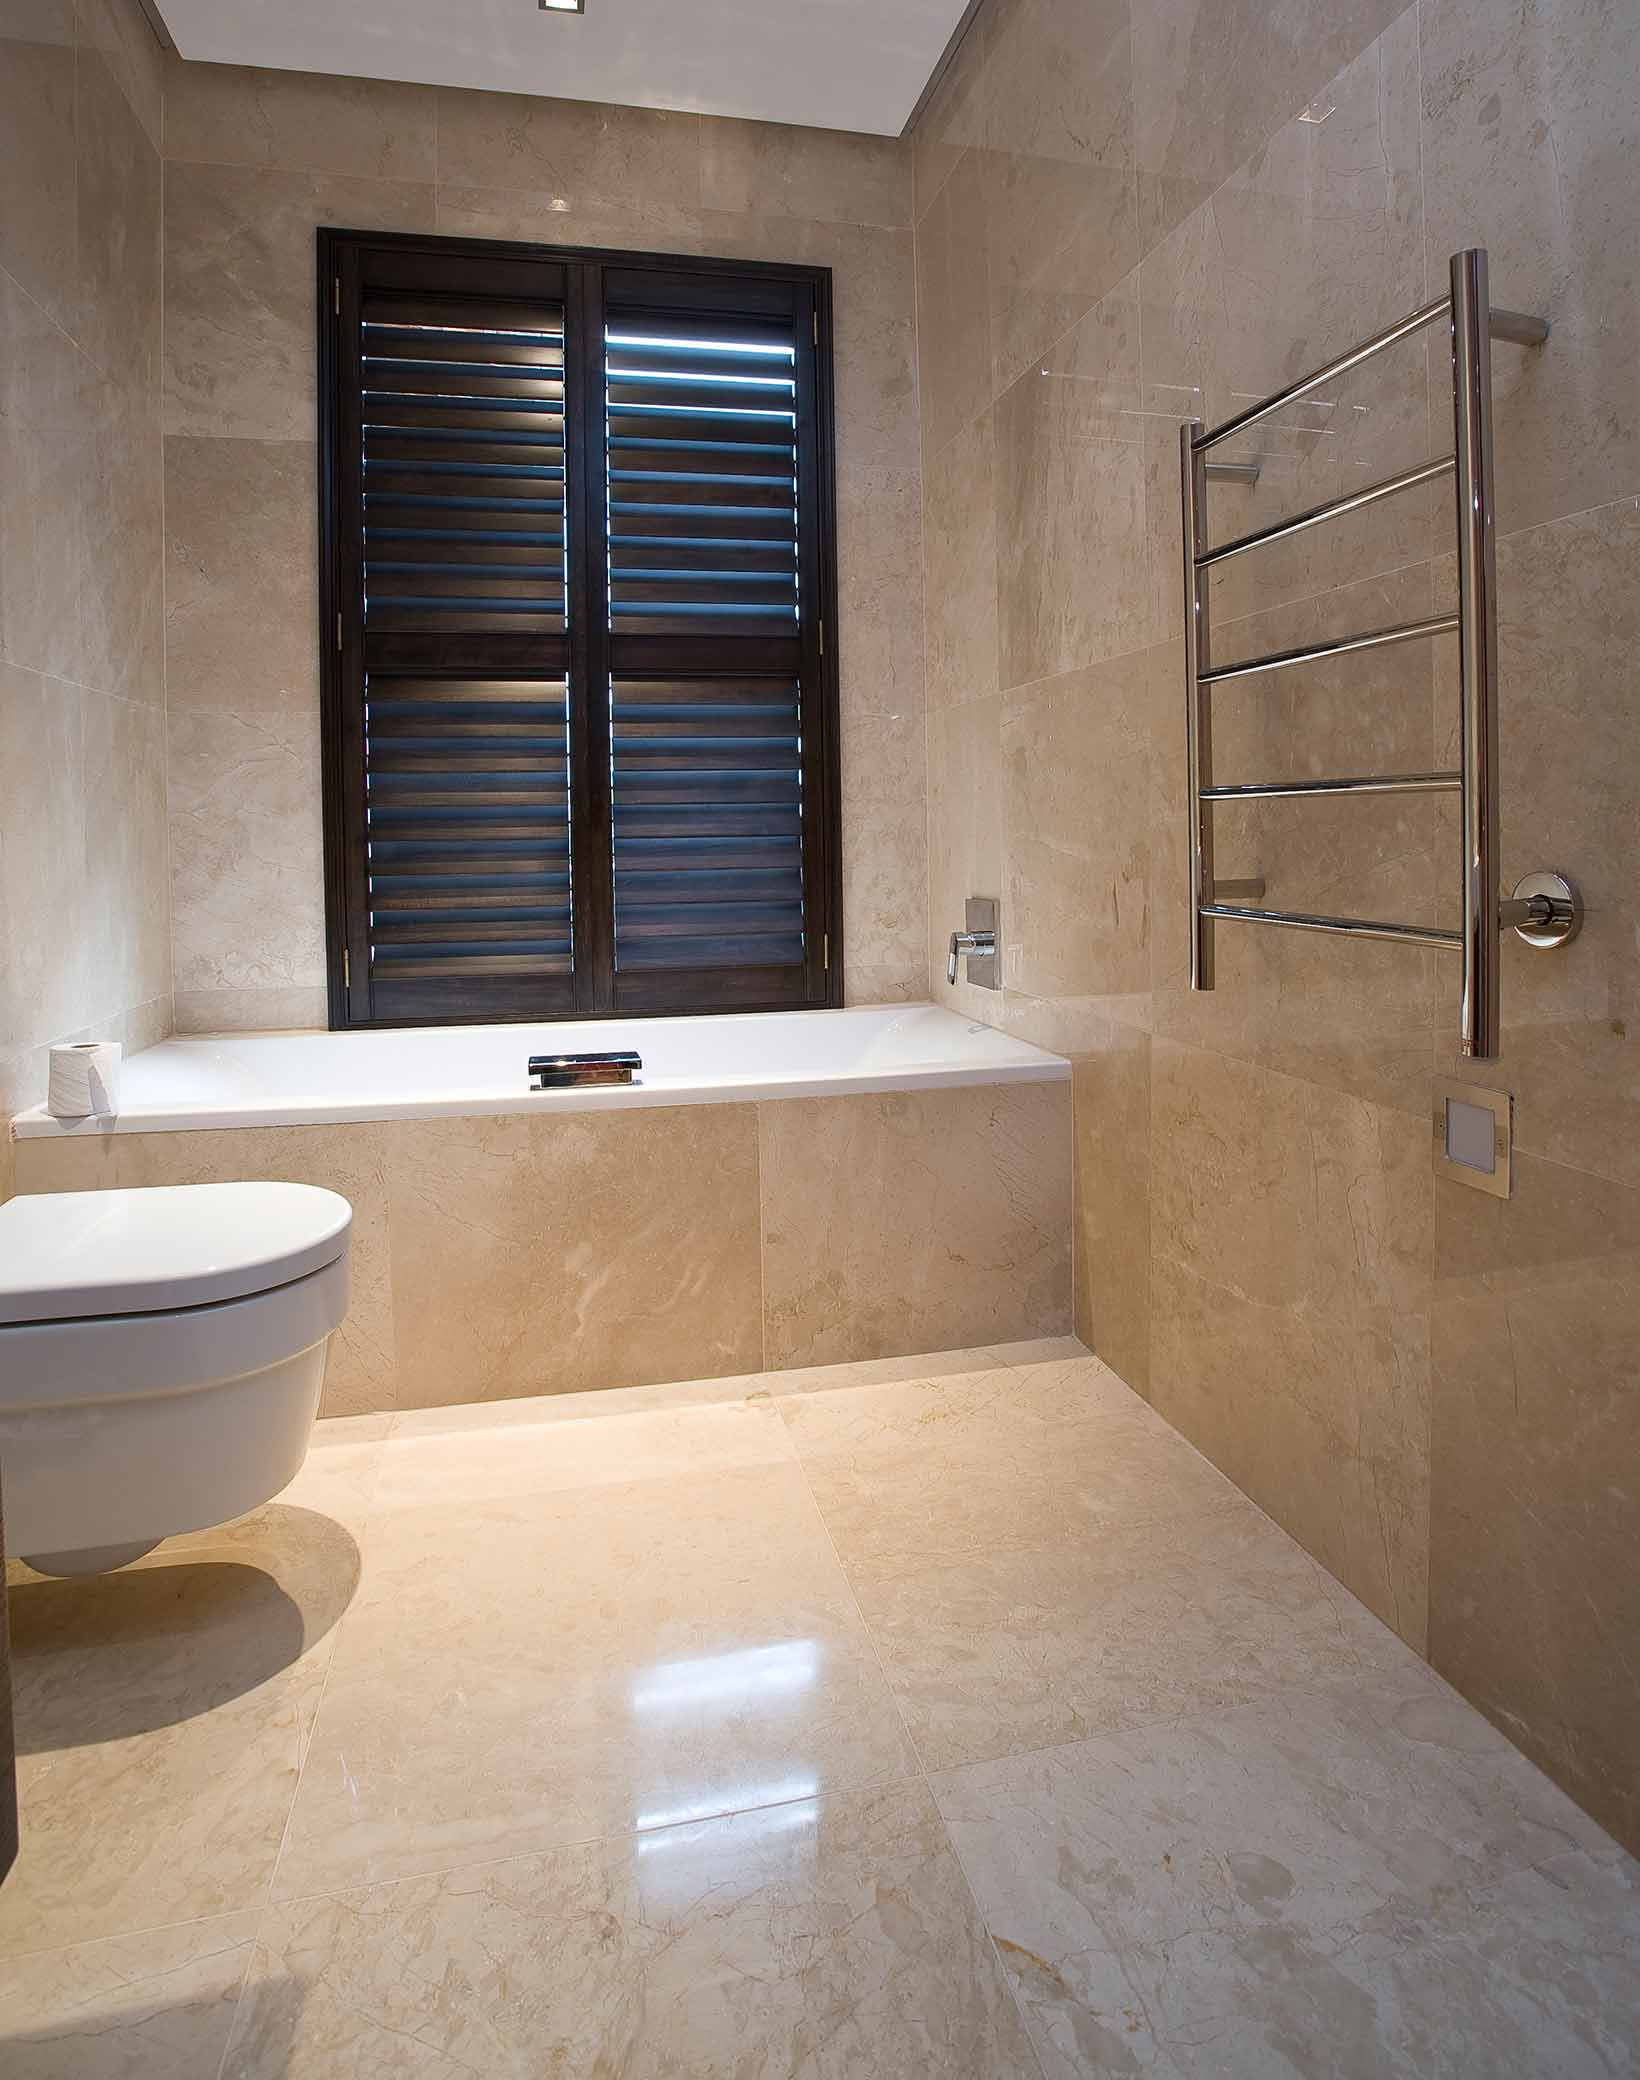 Travertine Bathroom Tiles - Travertine Sydney supplying tiles and ...